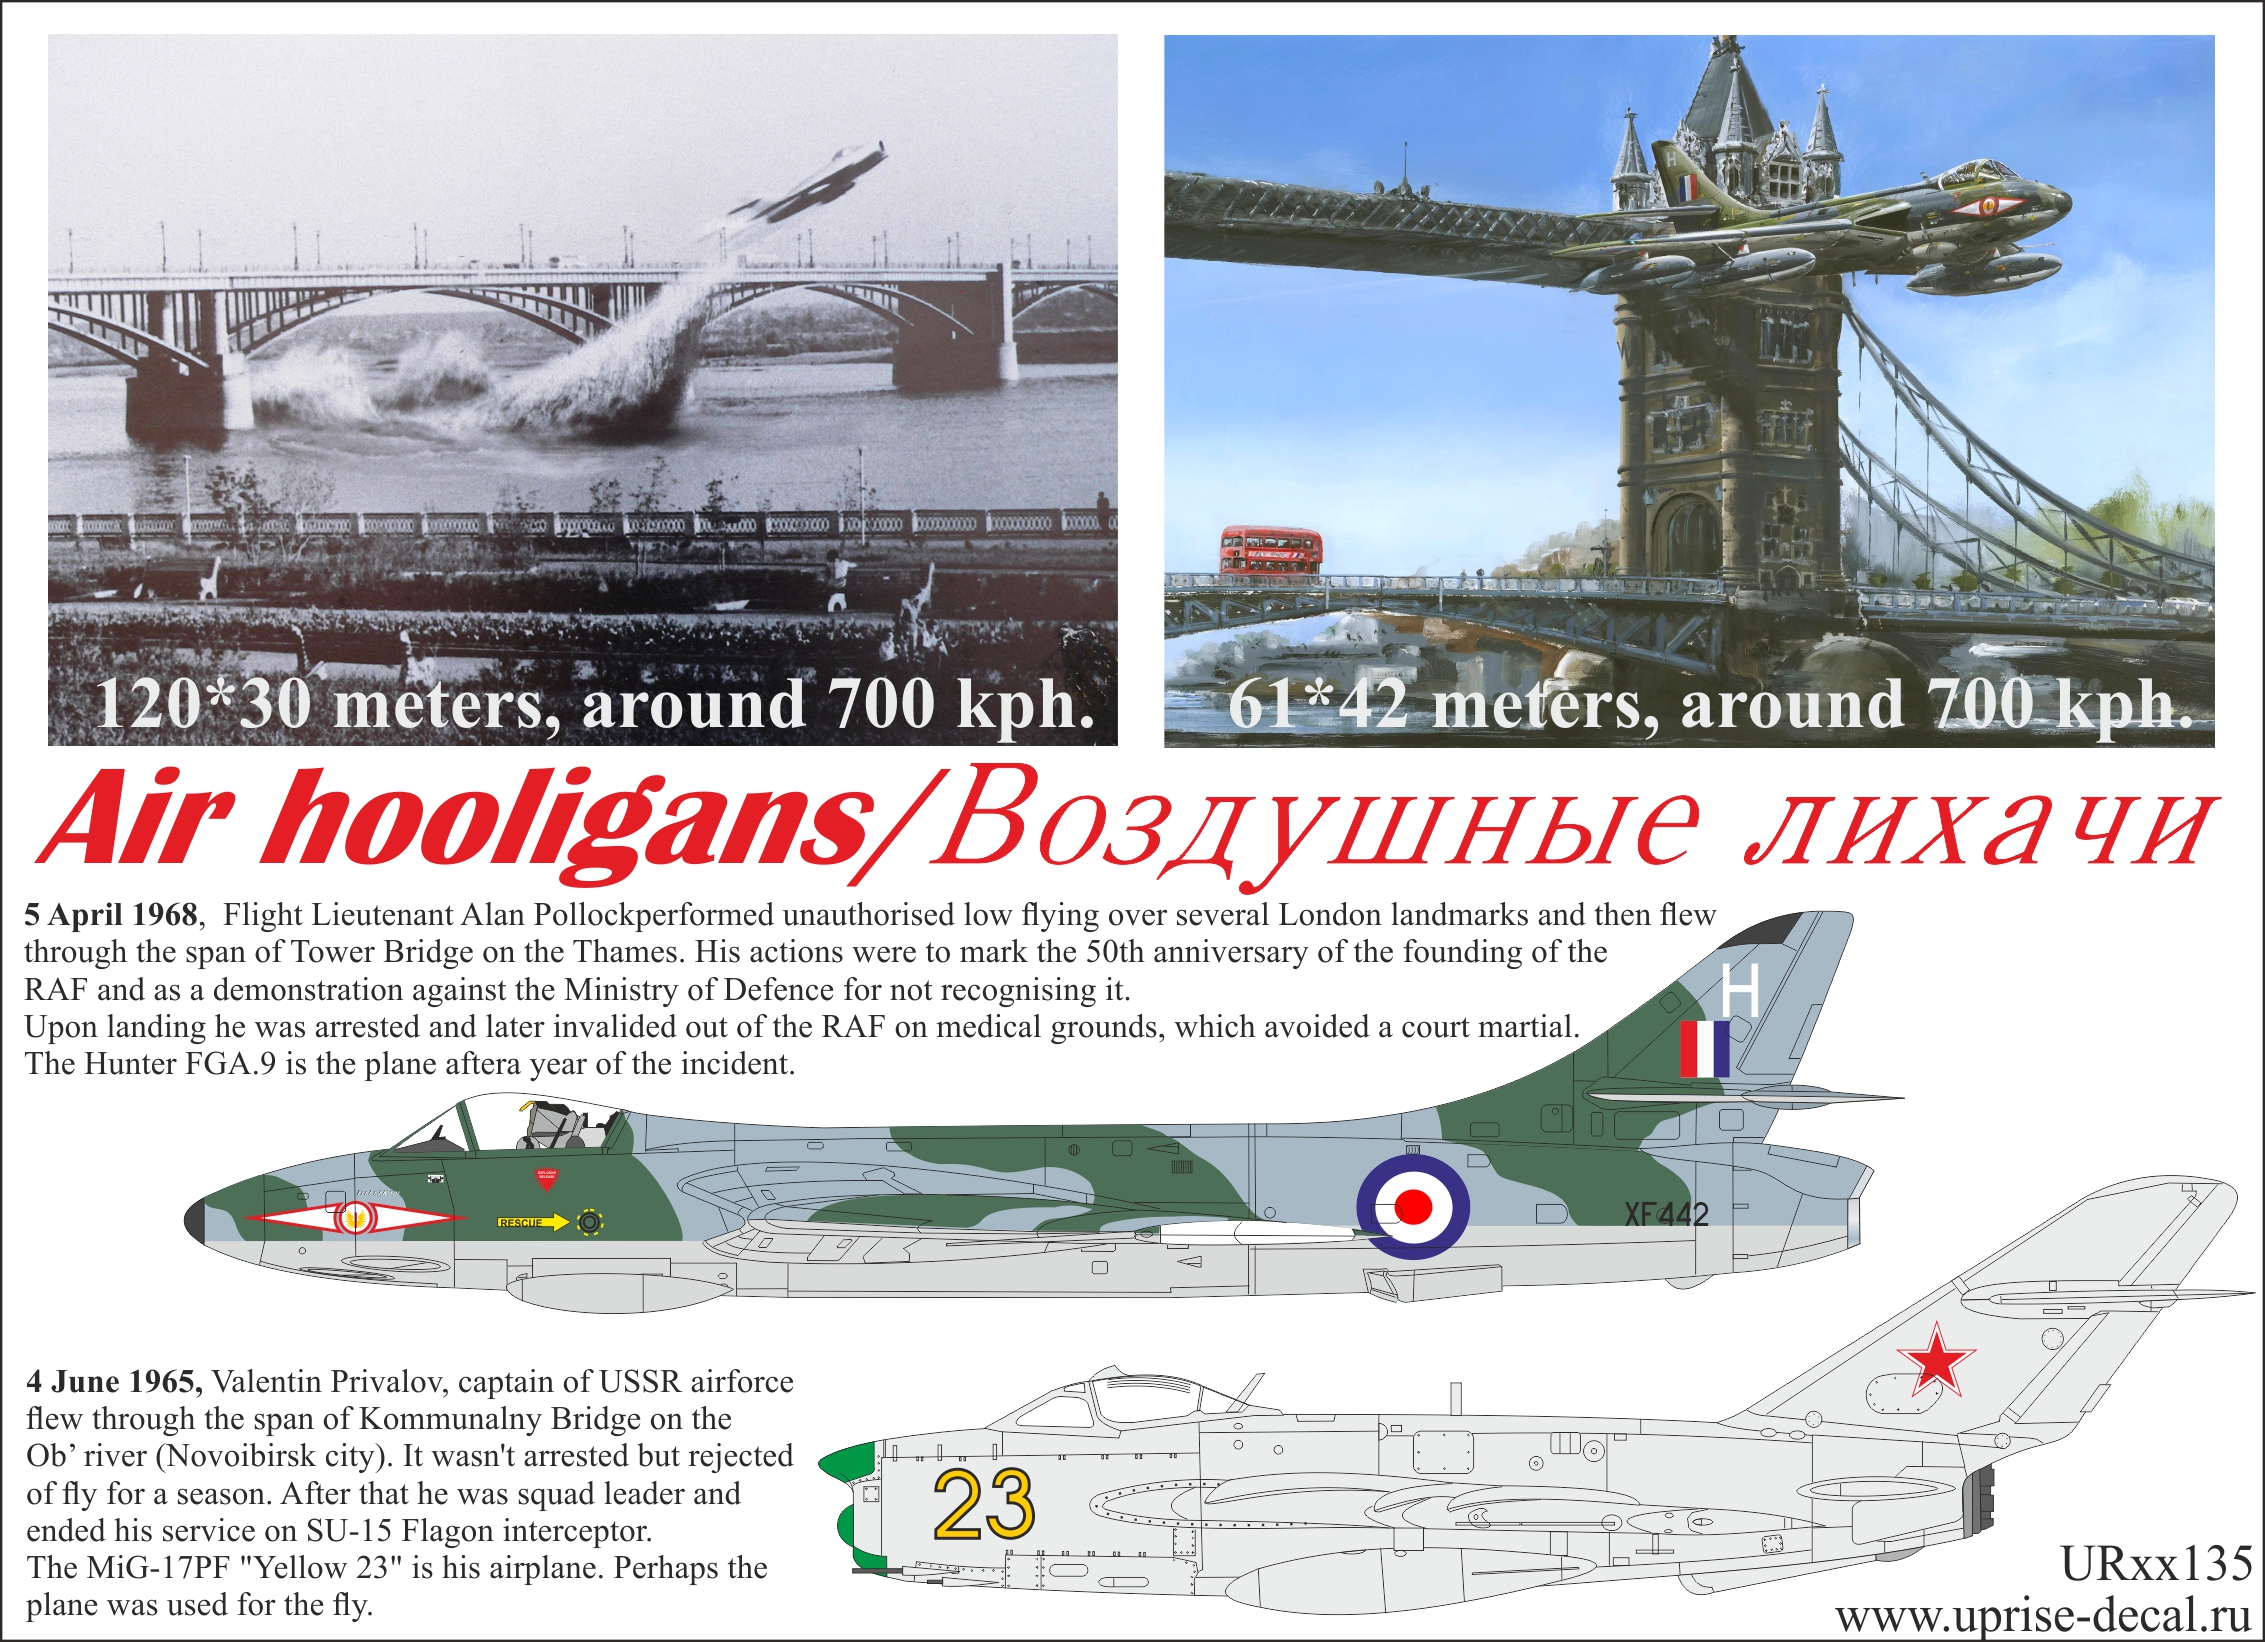 UR72135  декали  Air hooligans Hawker Hunter FGA.9  & MiG-17PF  (1:72)